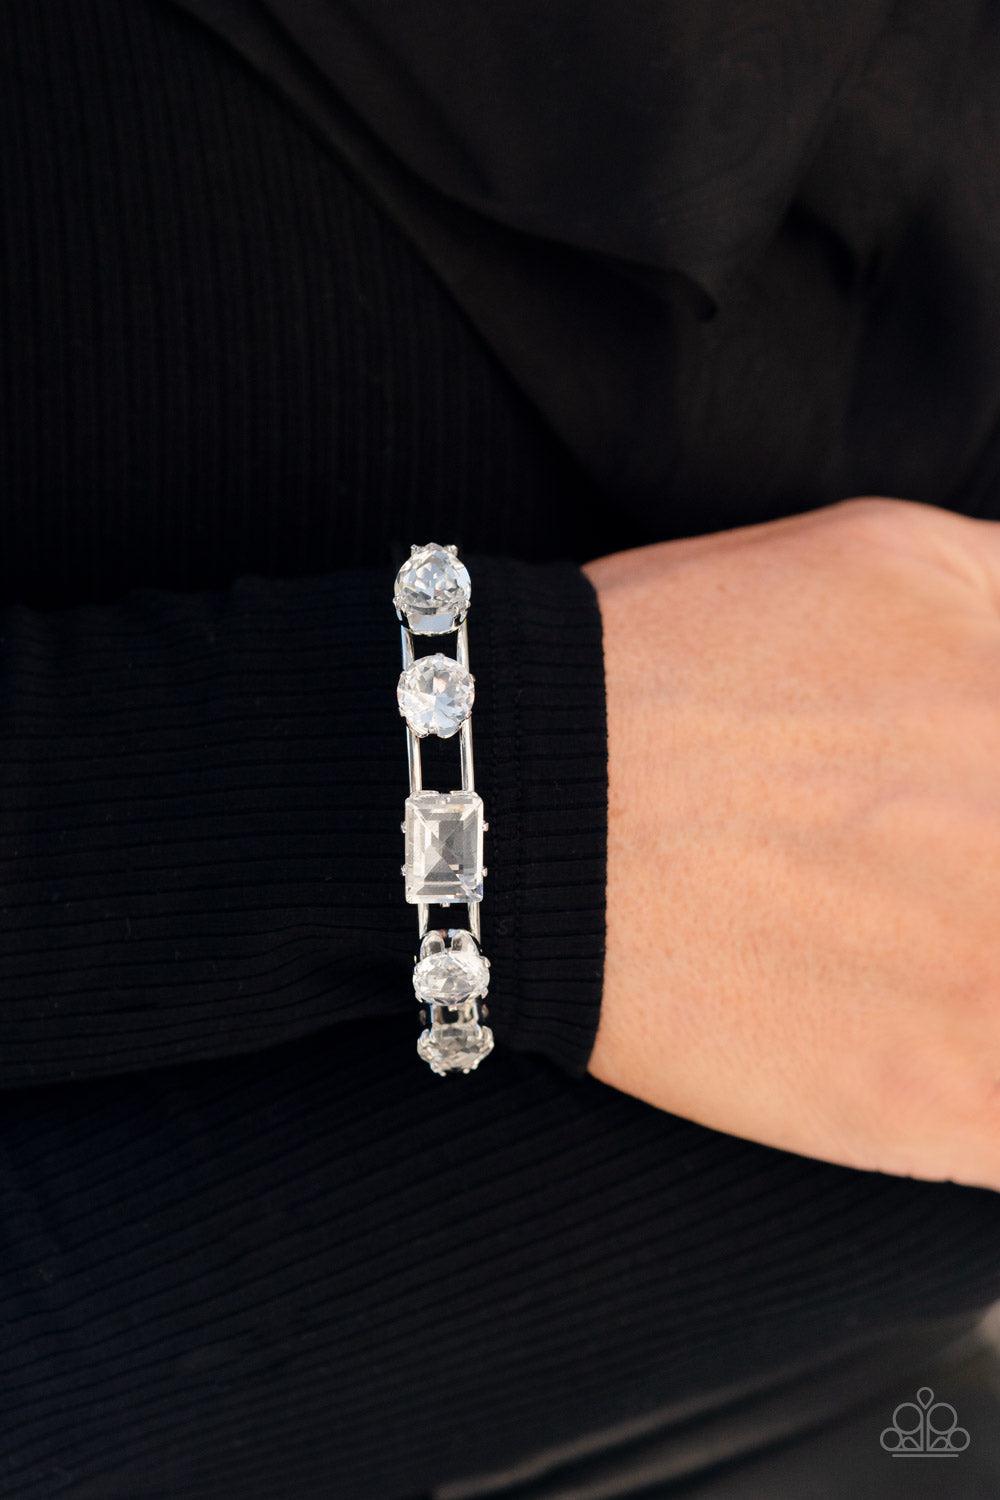 Uniquely Untapped White Rhinestone Cuff Bracelet - Paparazzi Accessories- lightbox - CarasShop.com - $5 Jewelry by Cara Jewels